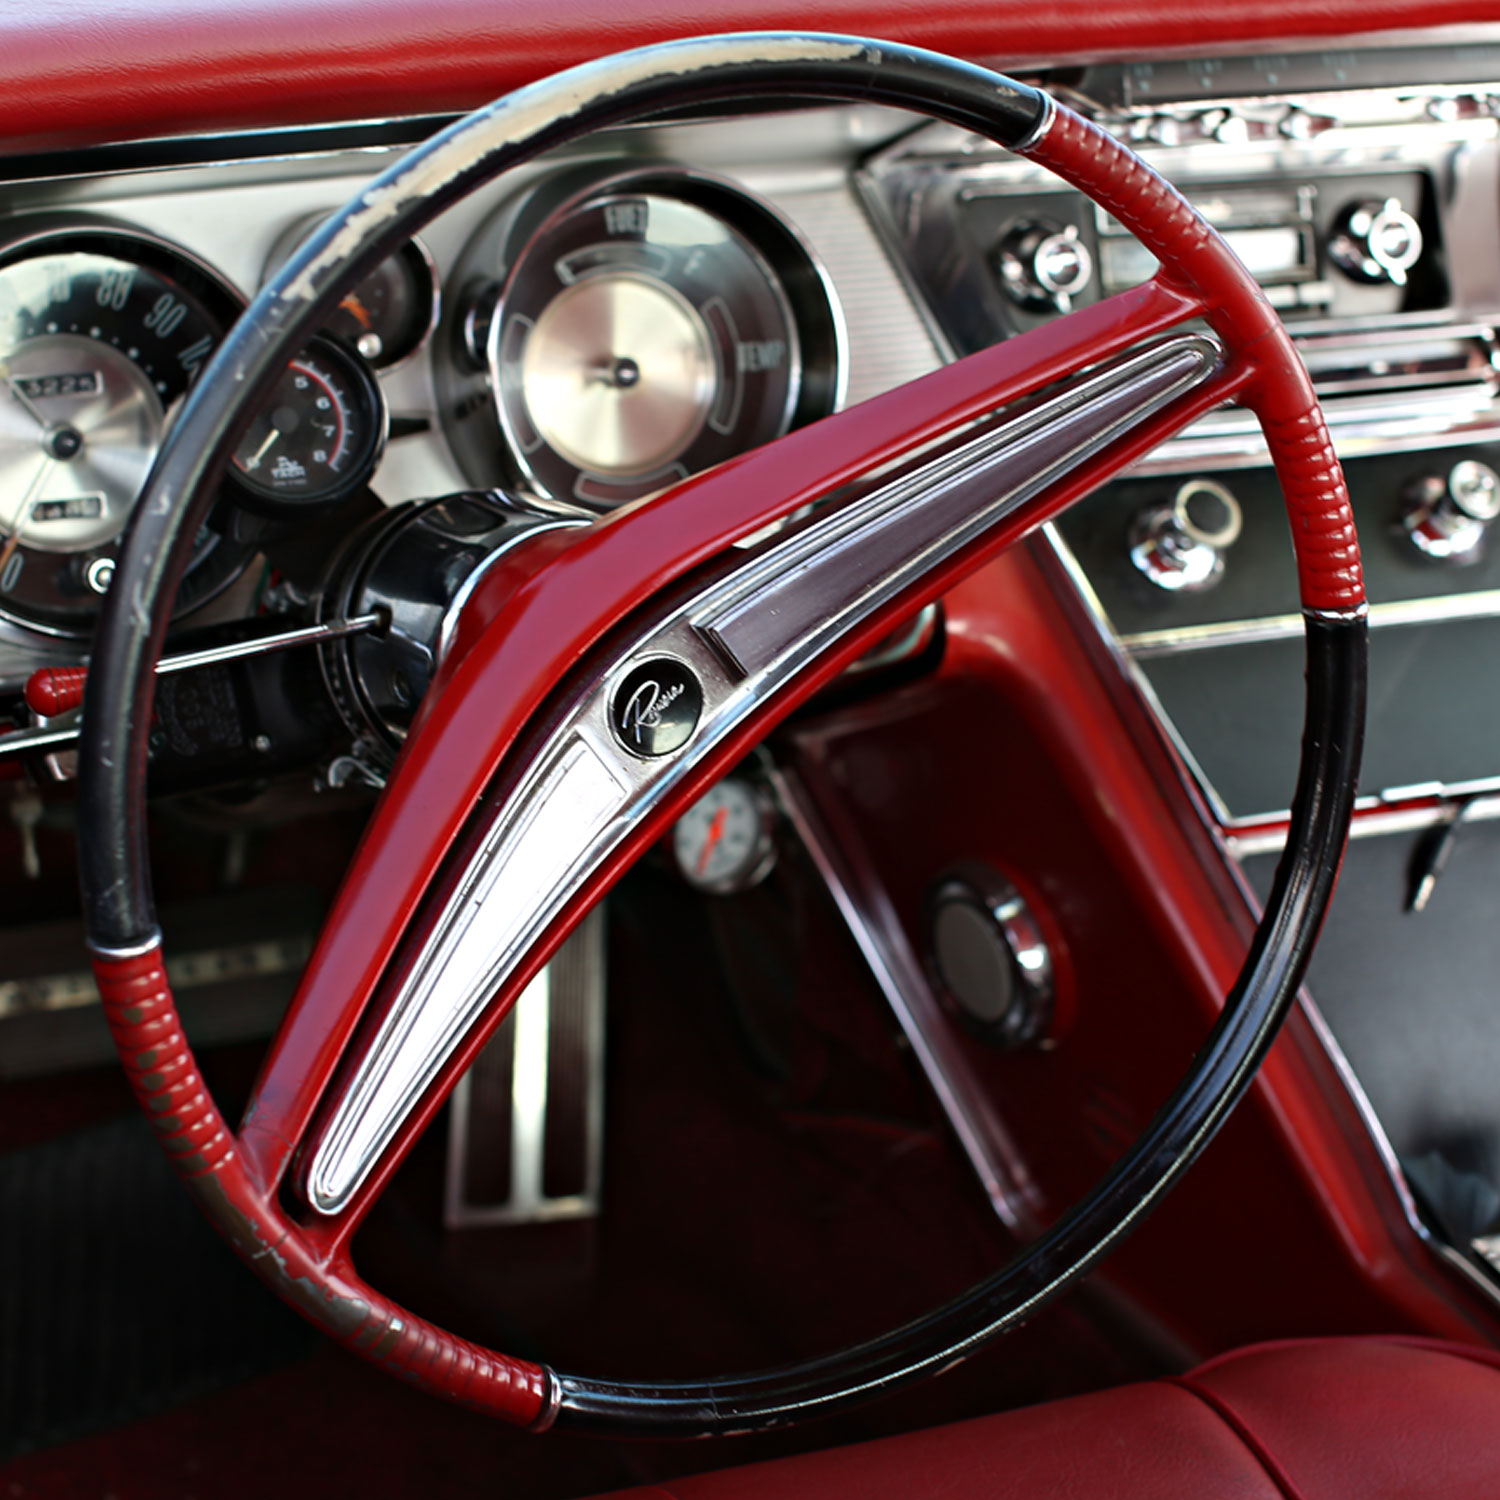 pomona-8-15-65bbq-wheel-red.jpg